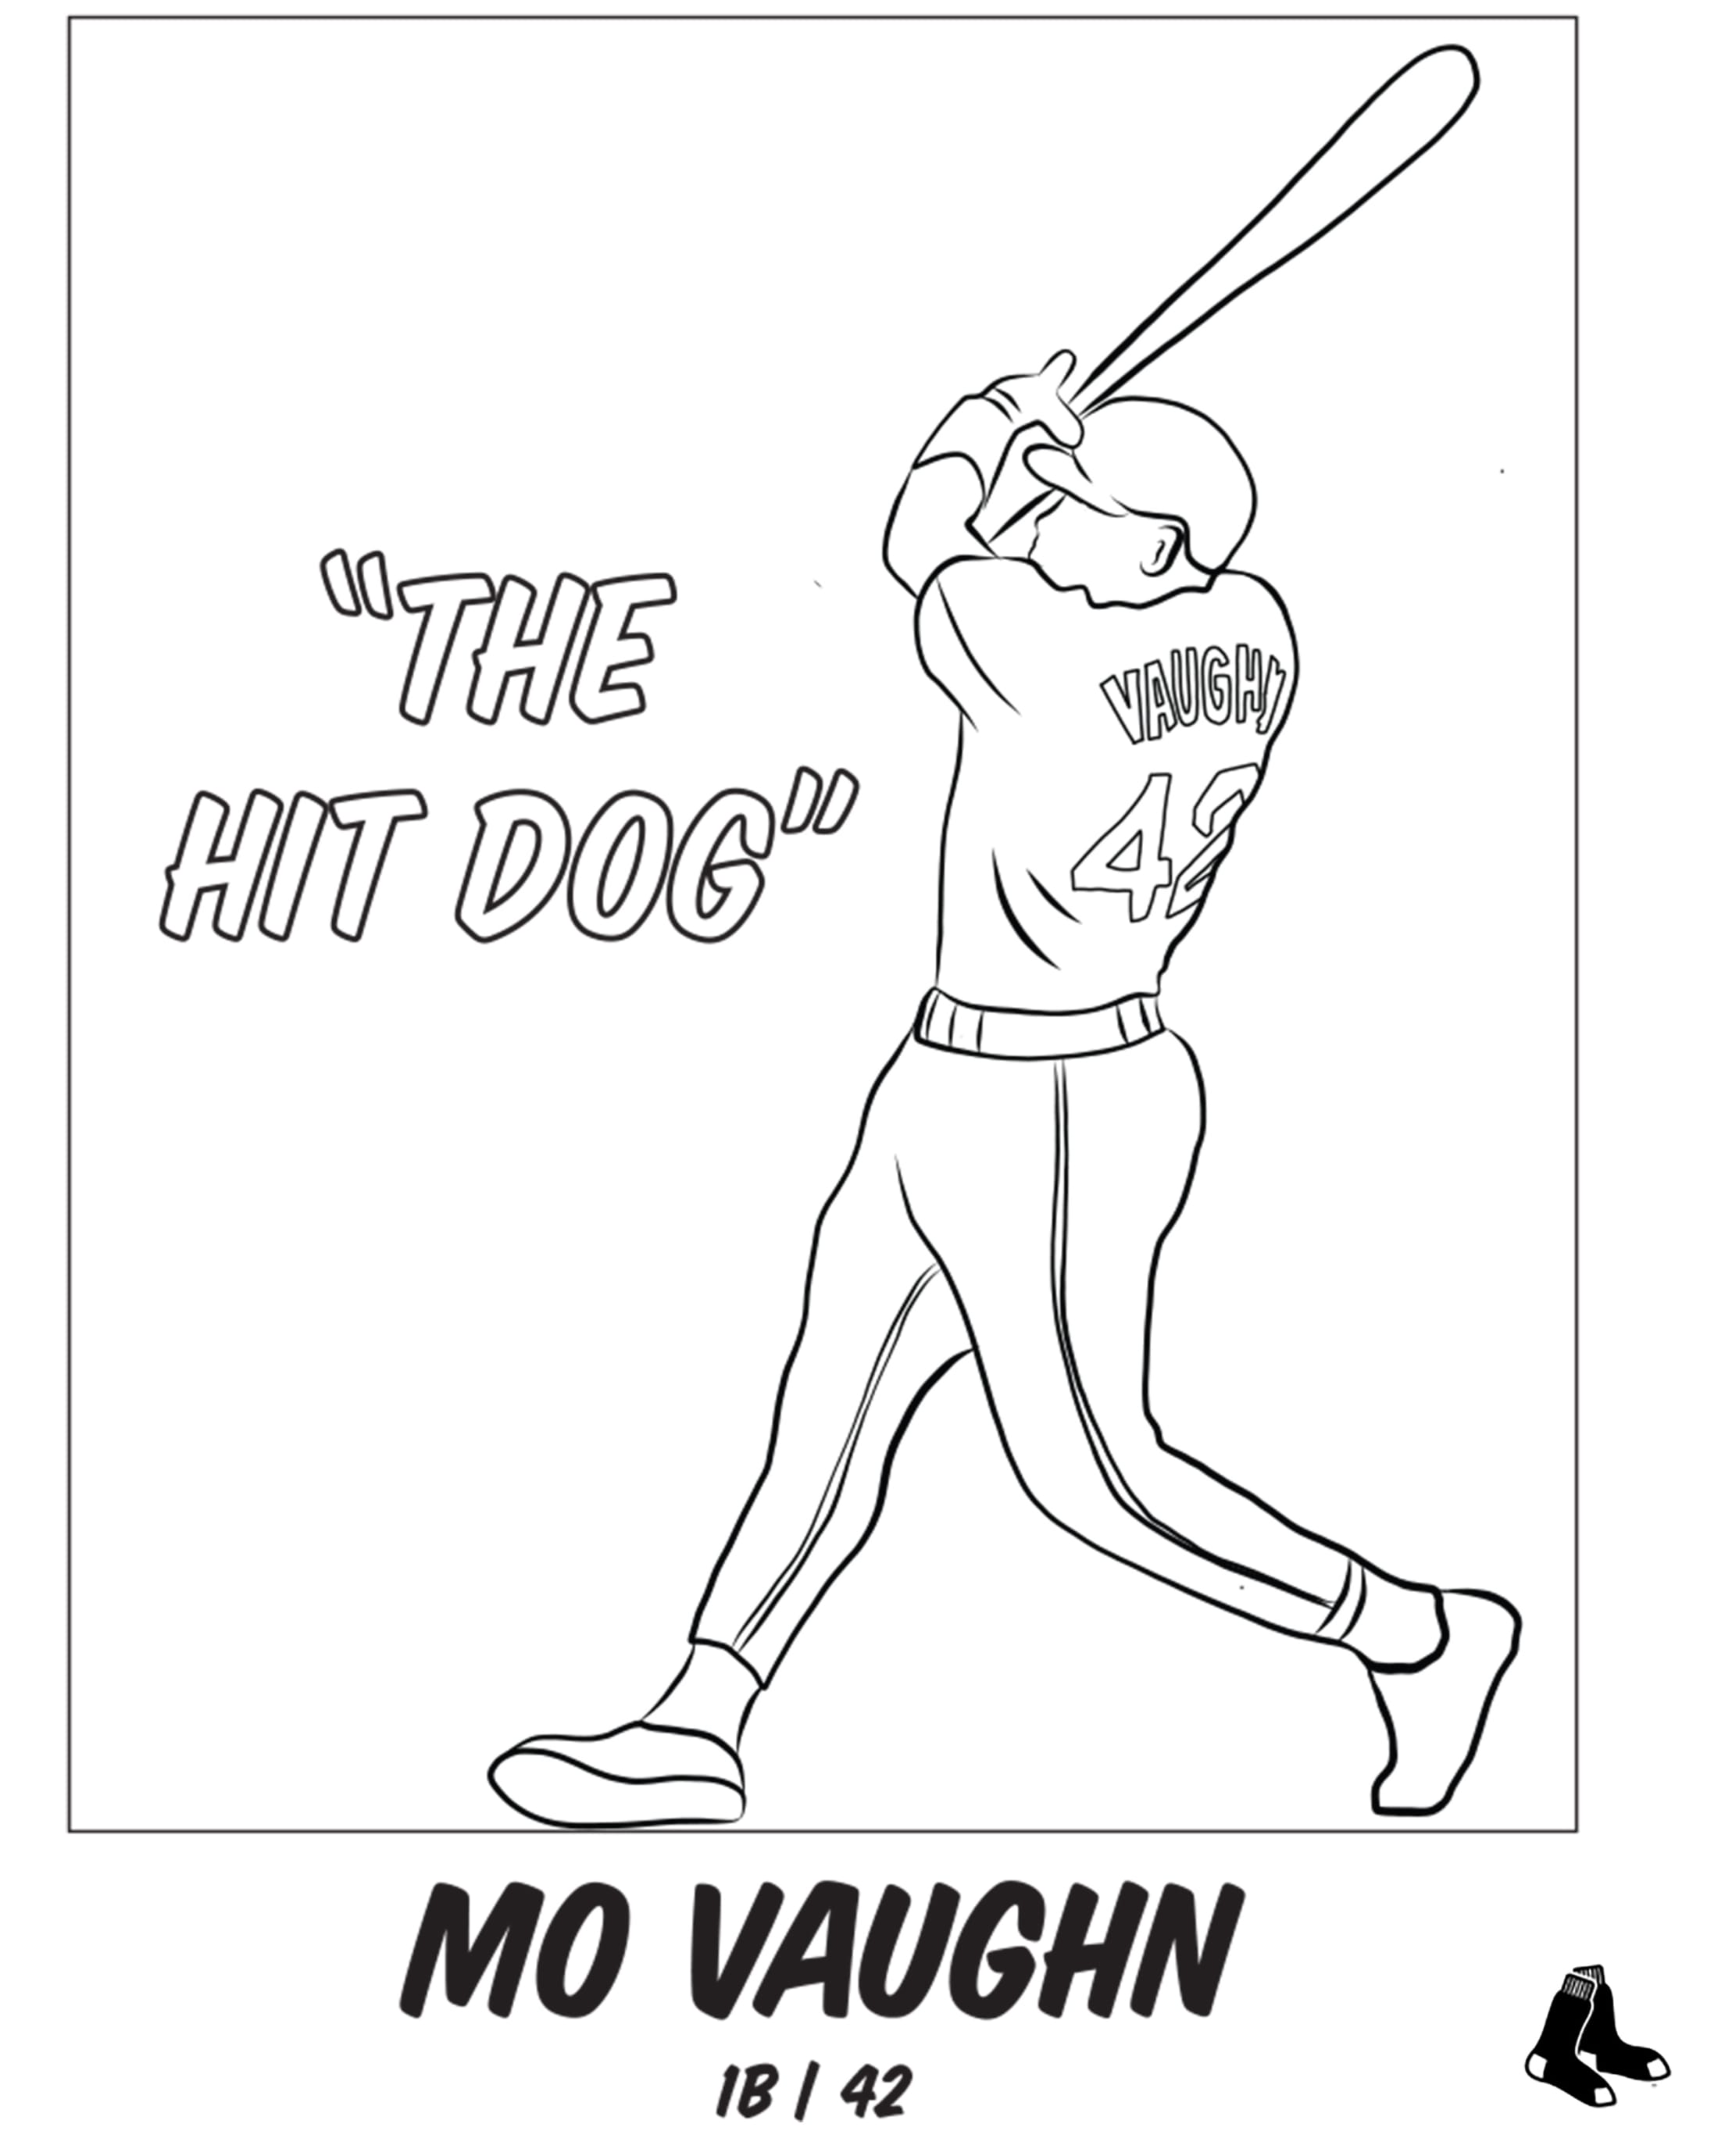 Mo Vaughn was last African American No. 42 in MLB